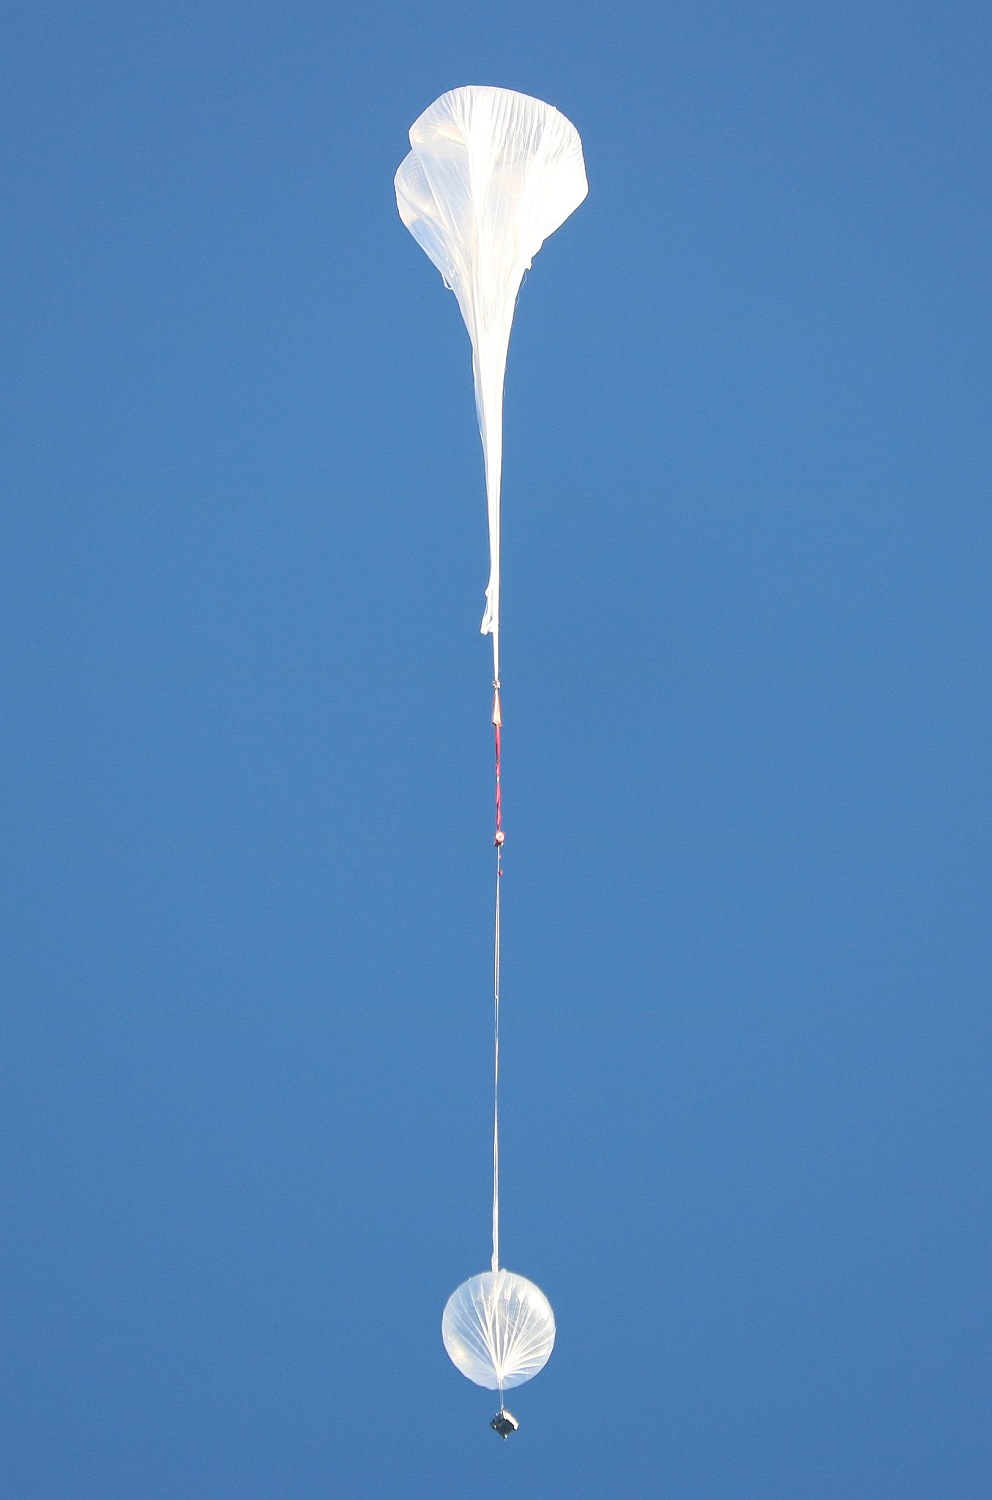 SOLAR gondola ascending under auxiliary balloon (Image: Andrew Warren)